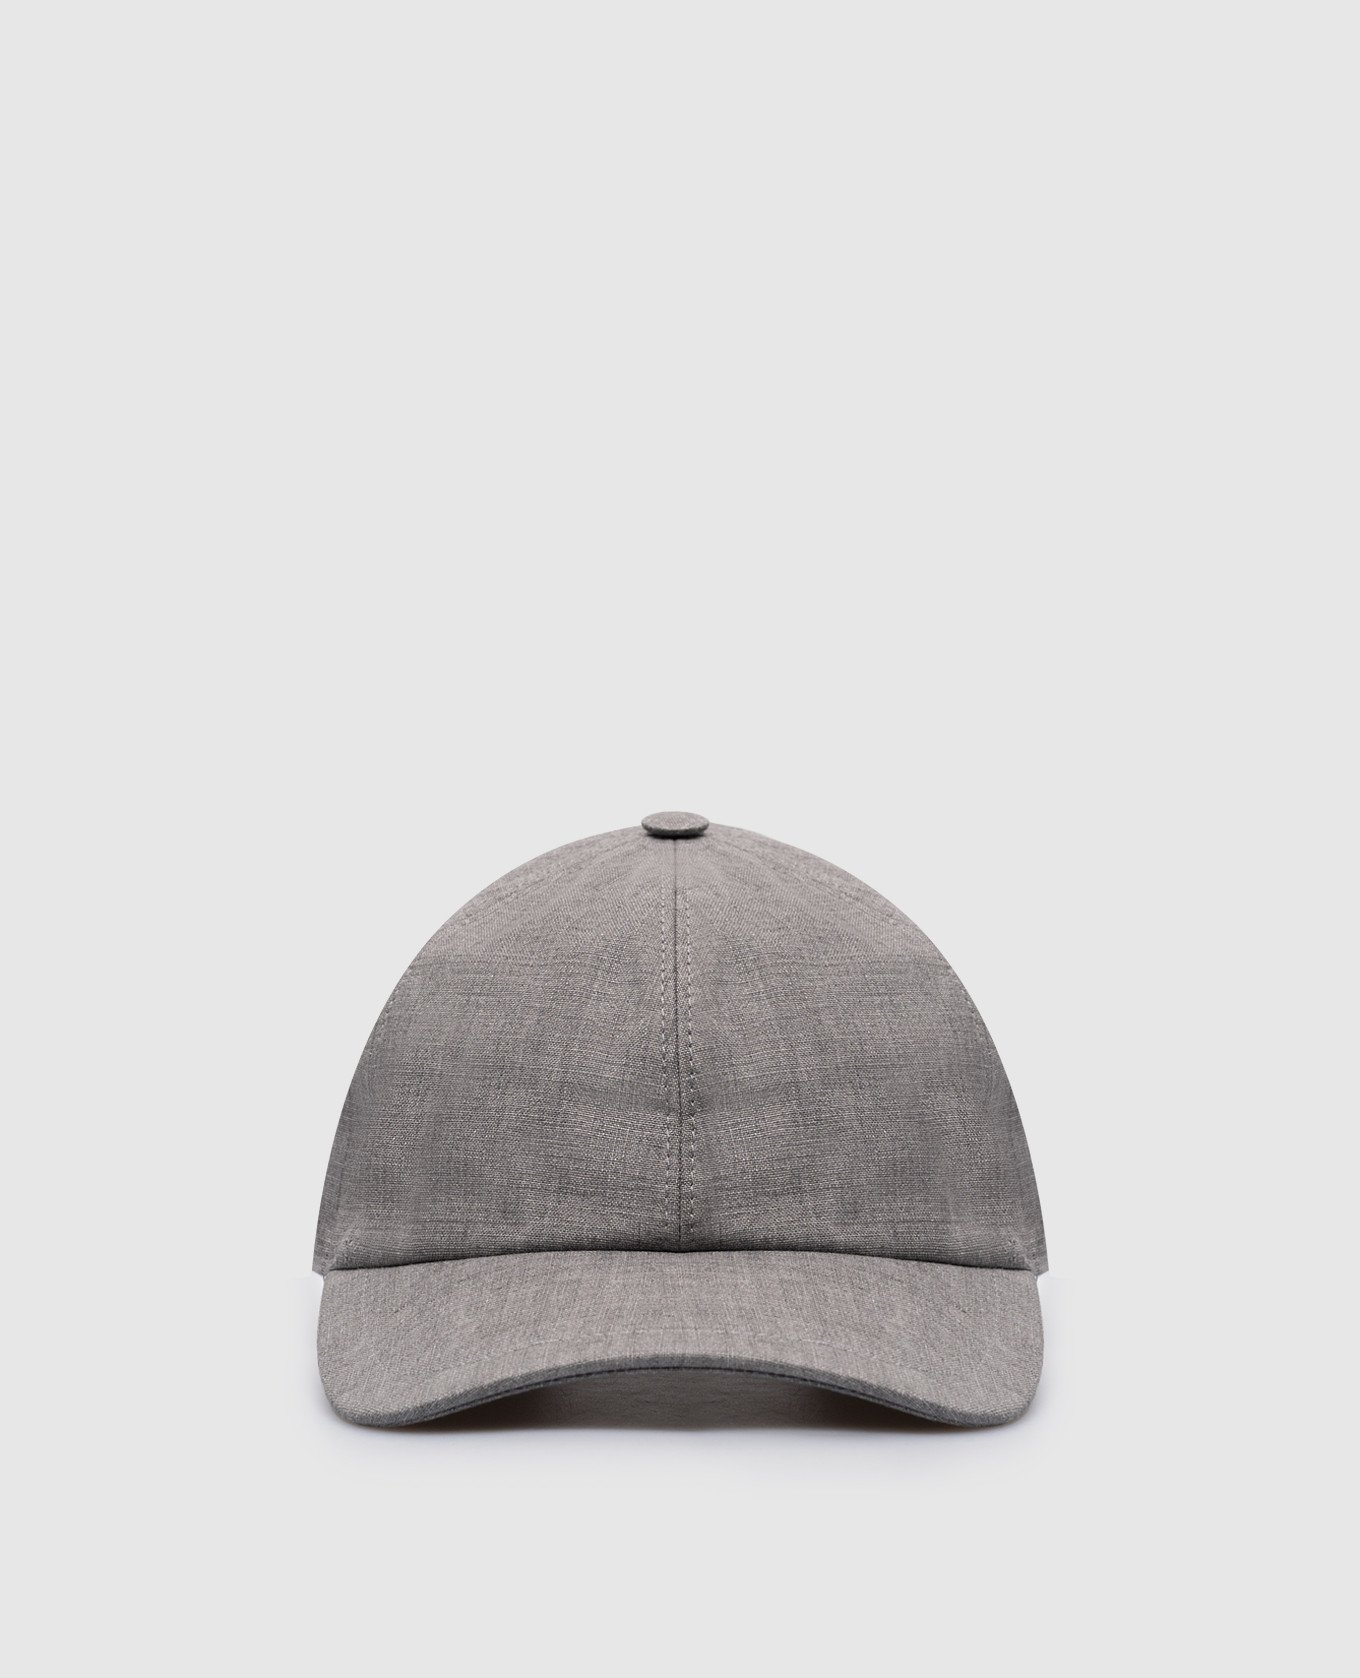 Gray linen cap with metallic logo